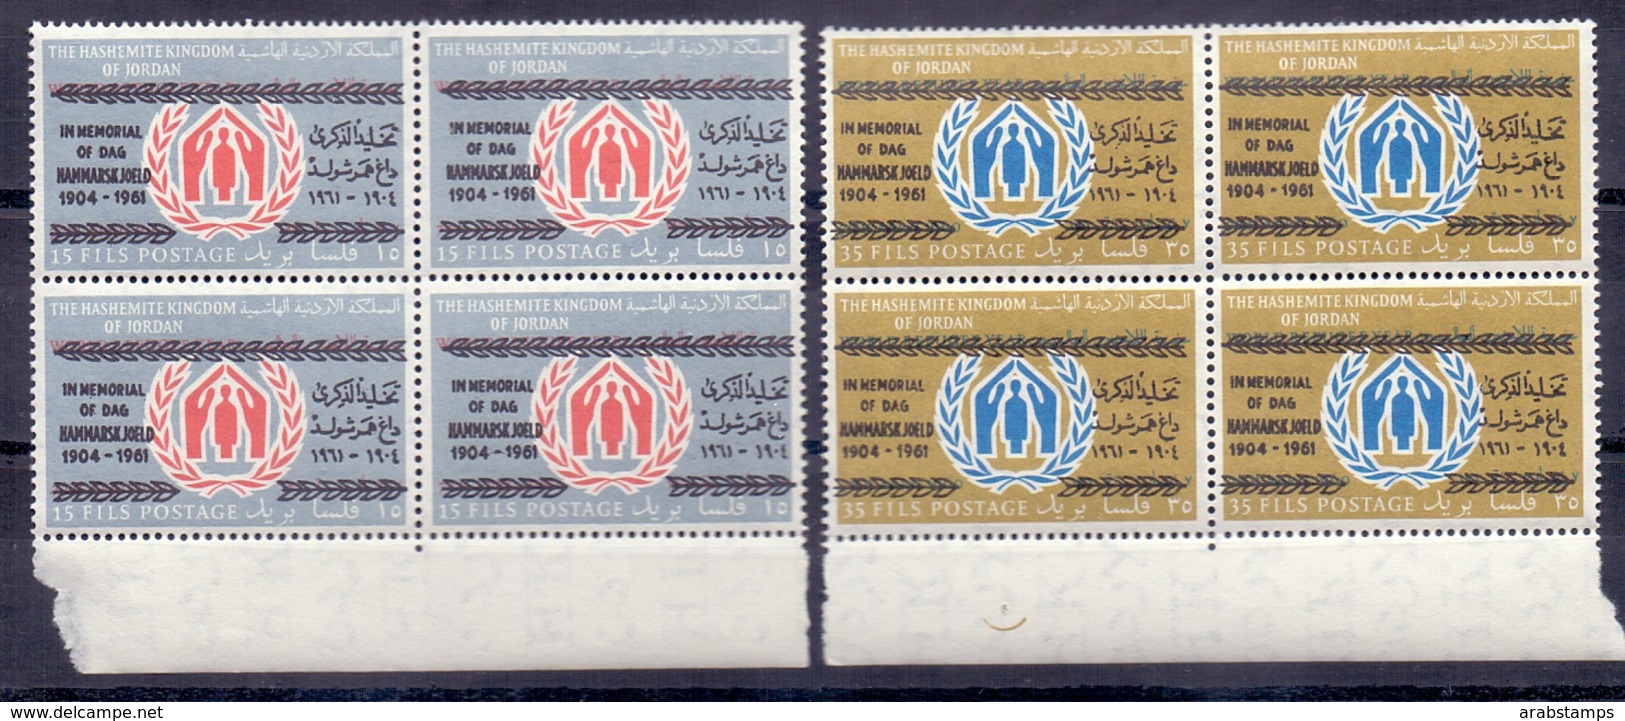 JORDAN. 1961. YEAR OF THE REFUGEE Overprint Dag Hammarskjold Complete Set Block Of 4 MNH9 - Jordan